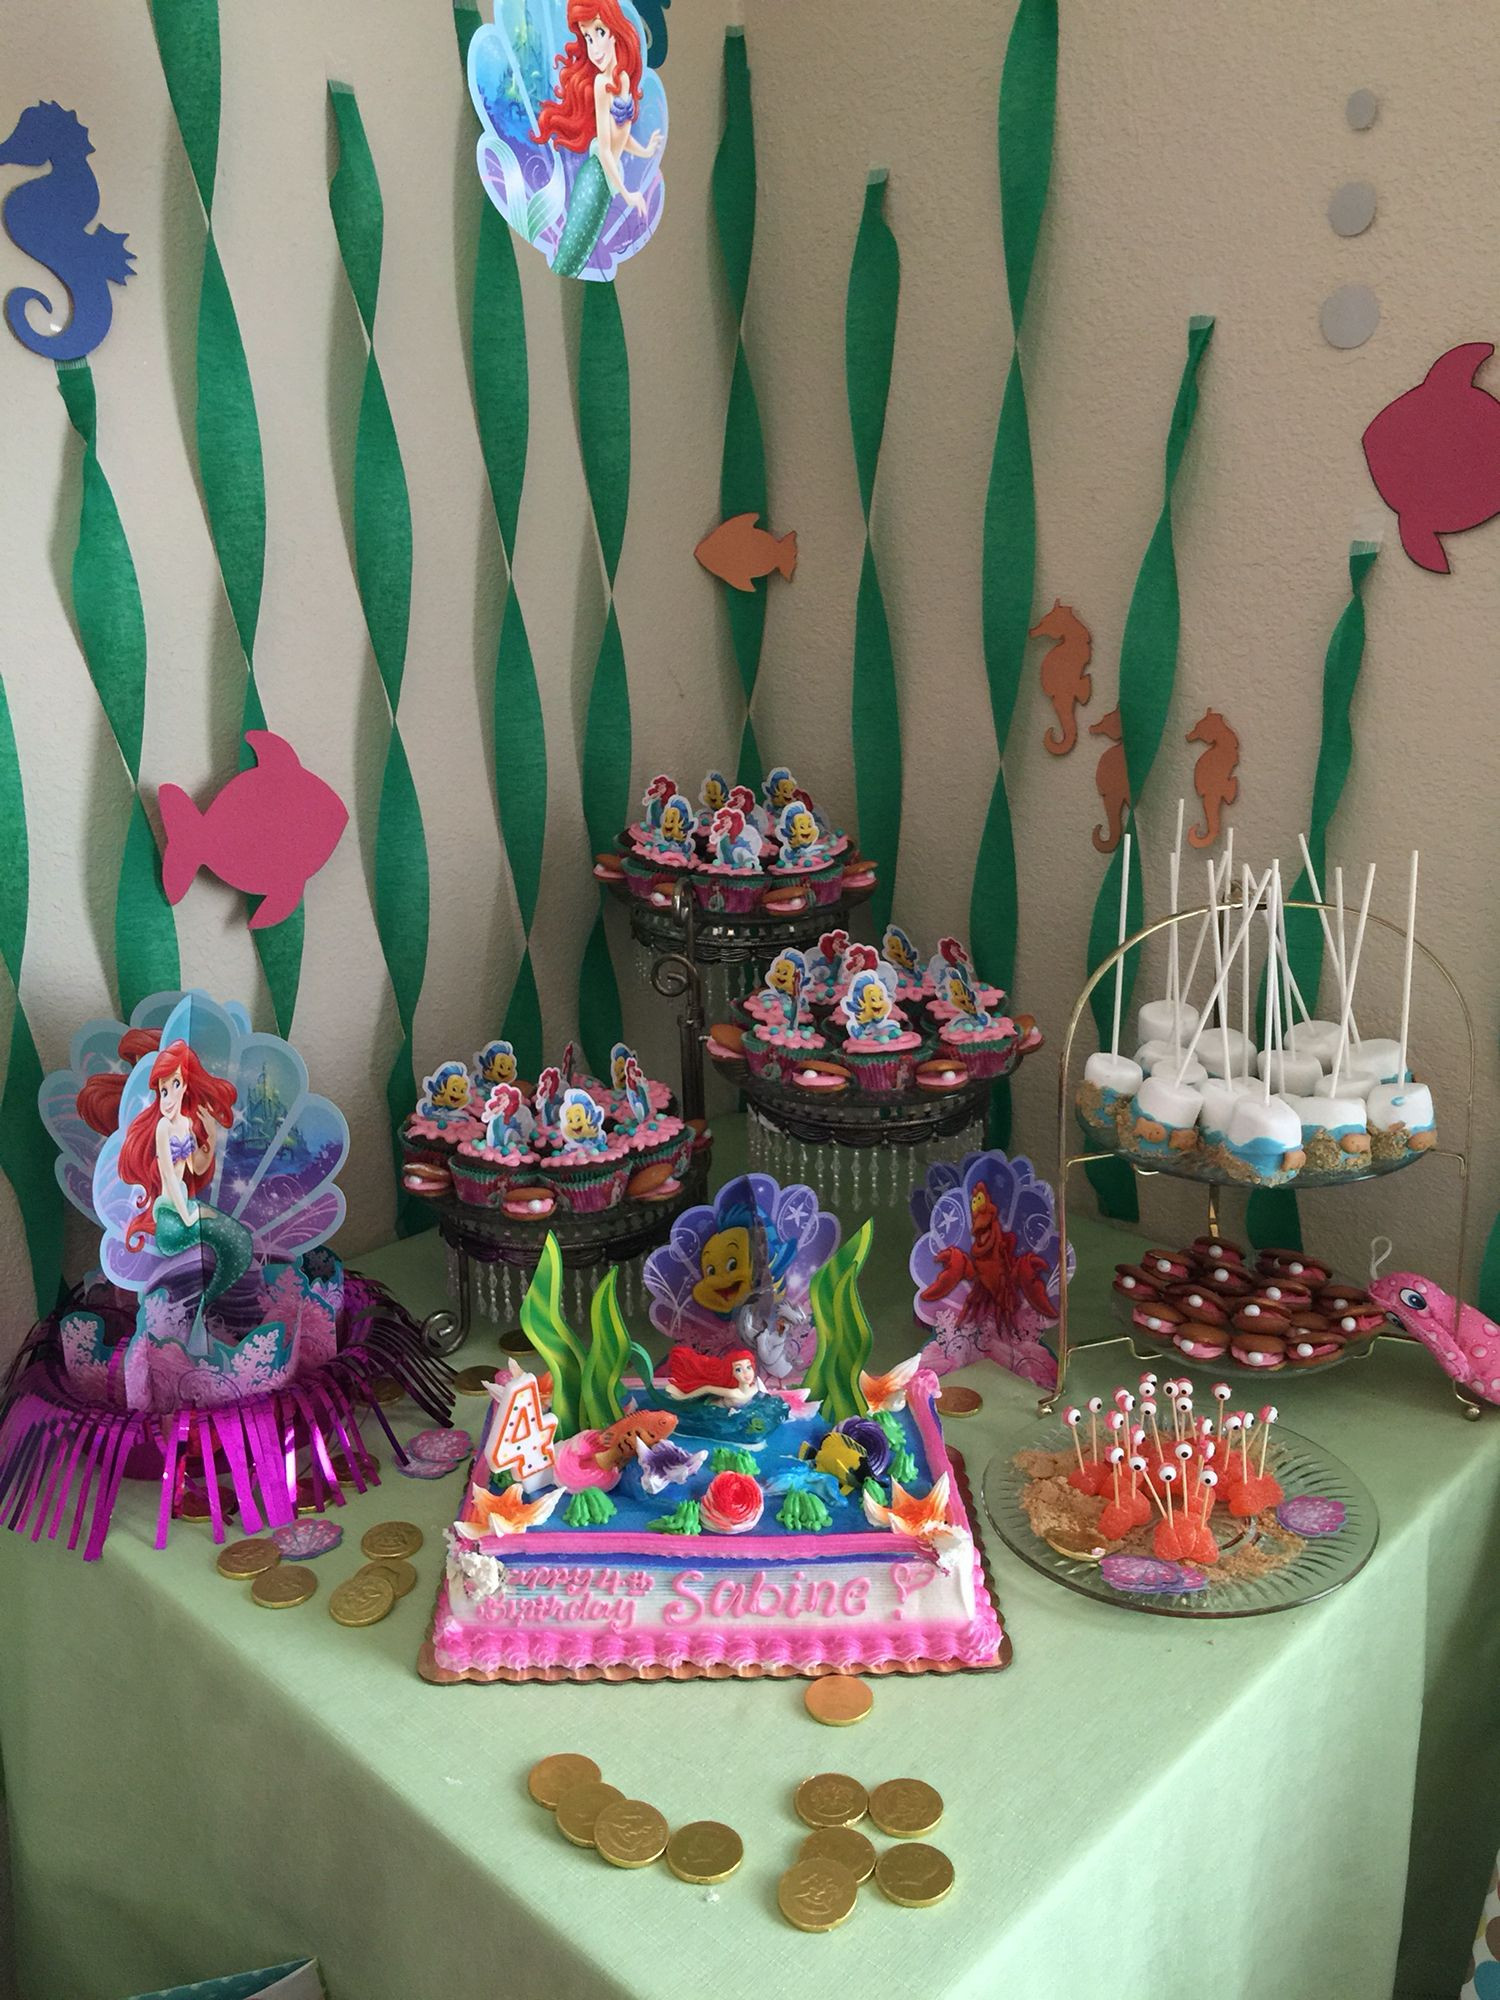 The Little Mermaid Theme Party Ideas
 Little mermaid theme kids birthday party